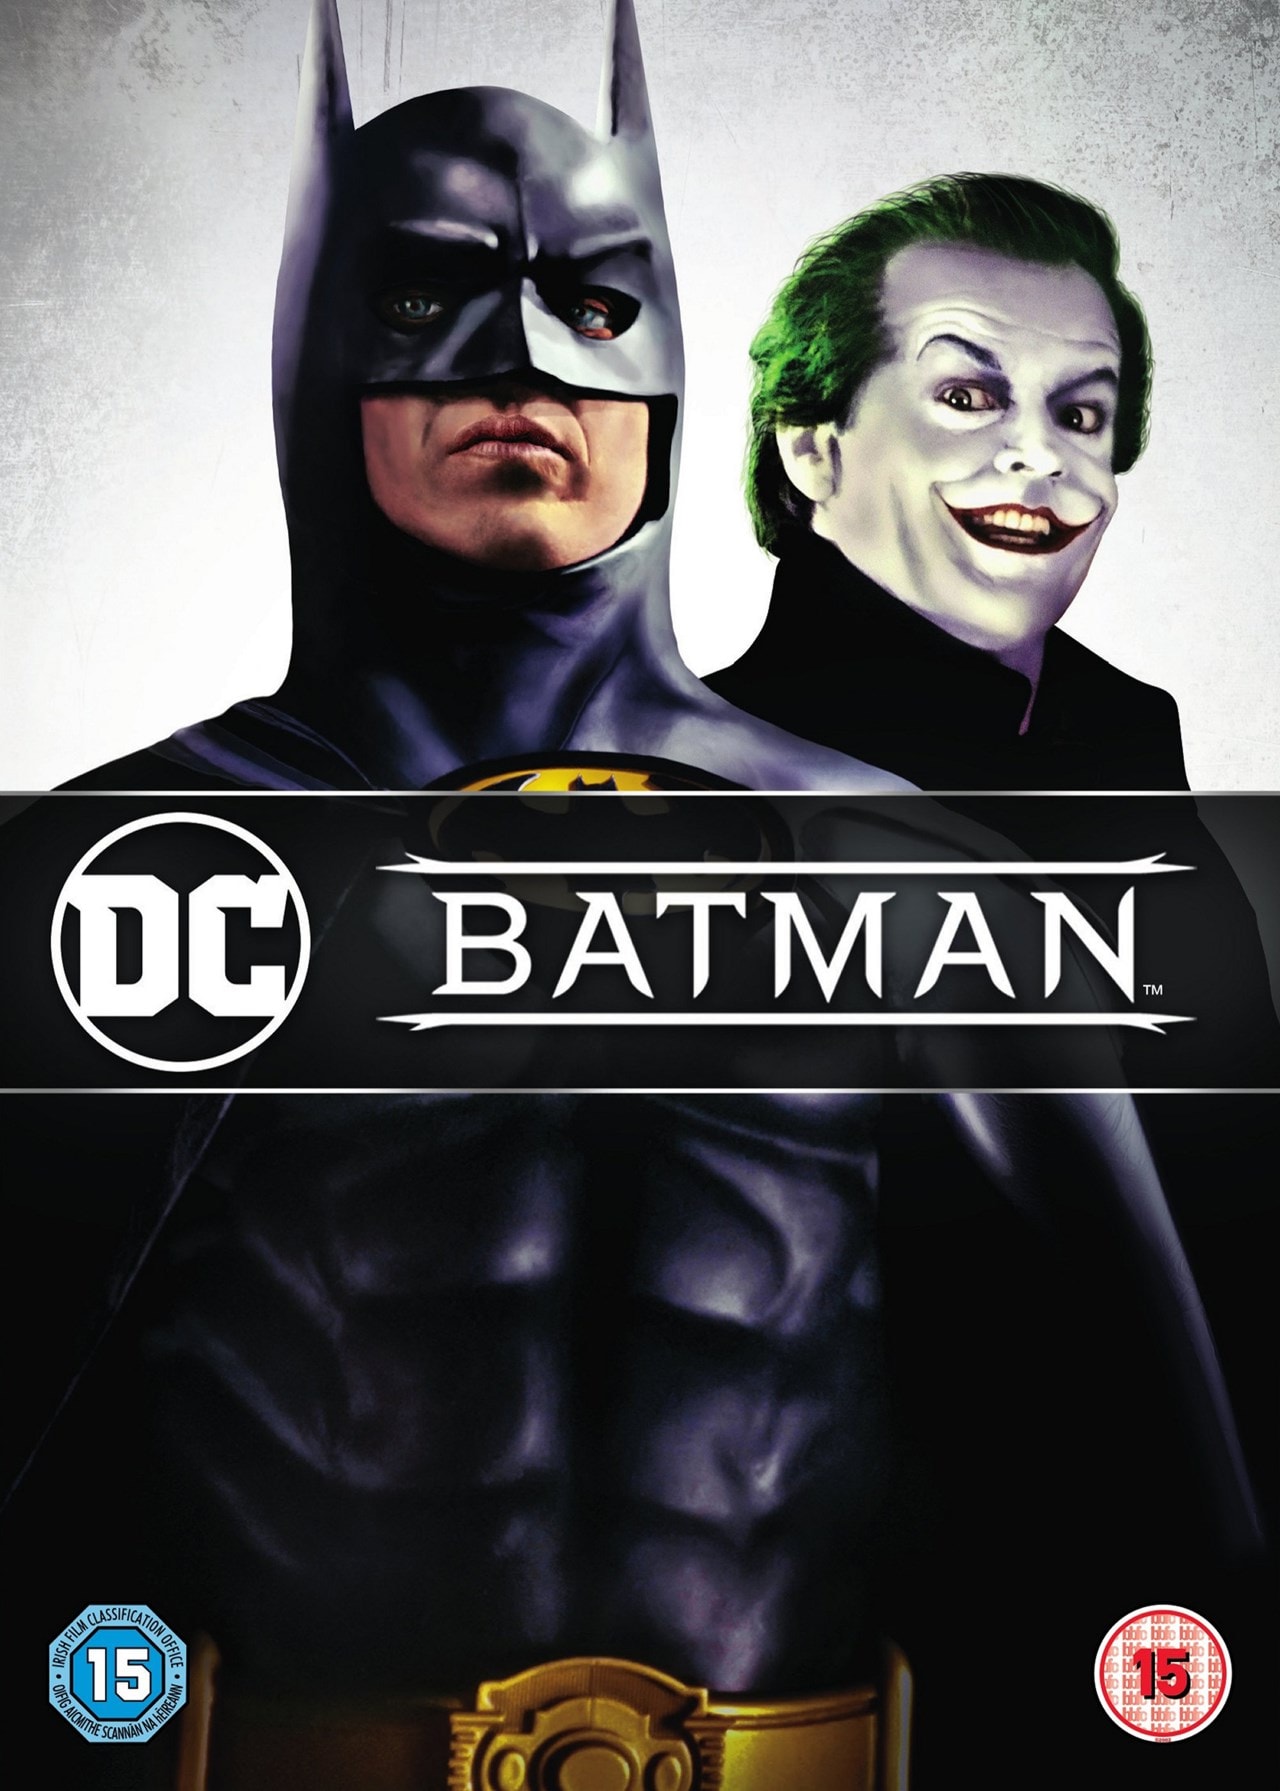 Batman | DVD | Free shipping over £20 | HMV Store